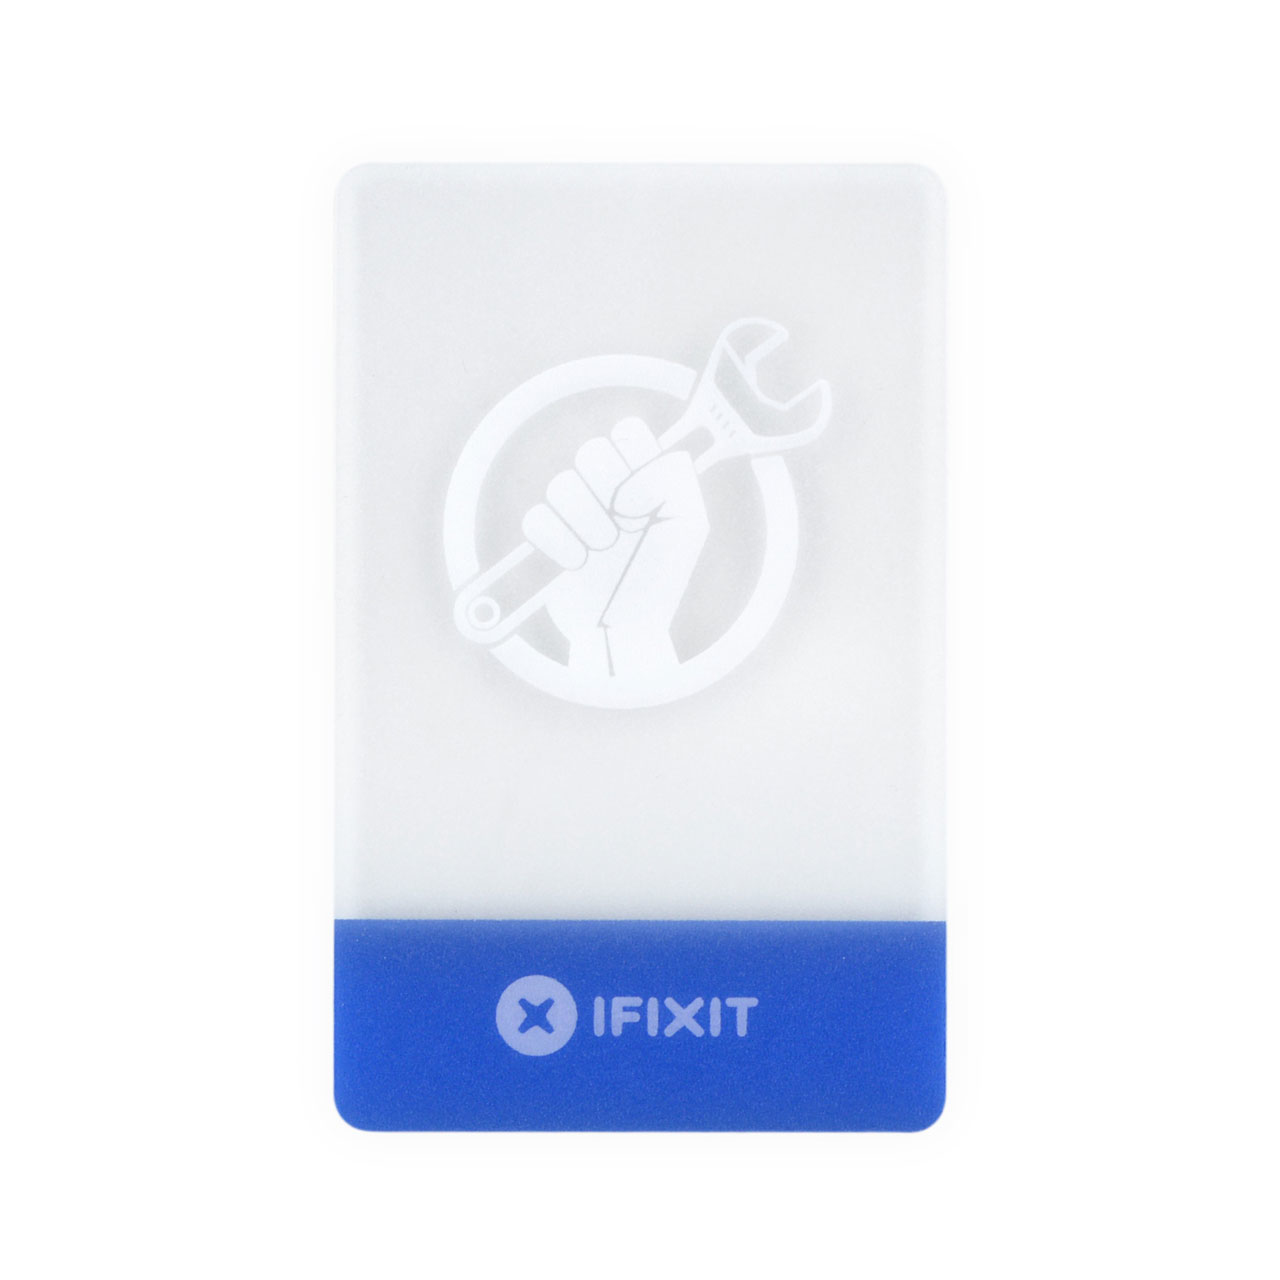 iFixit EU145101 - Öffnungswerkzeug - Plastik-Karte - Kunststoff - Blau - Transparent - Weiß - 2 Werkzeug